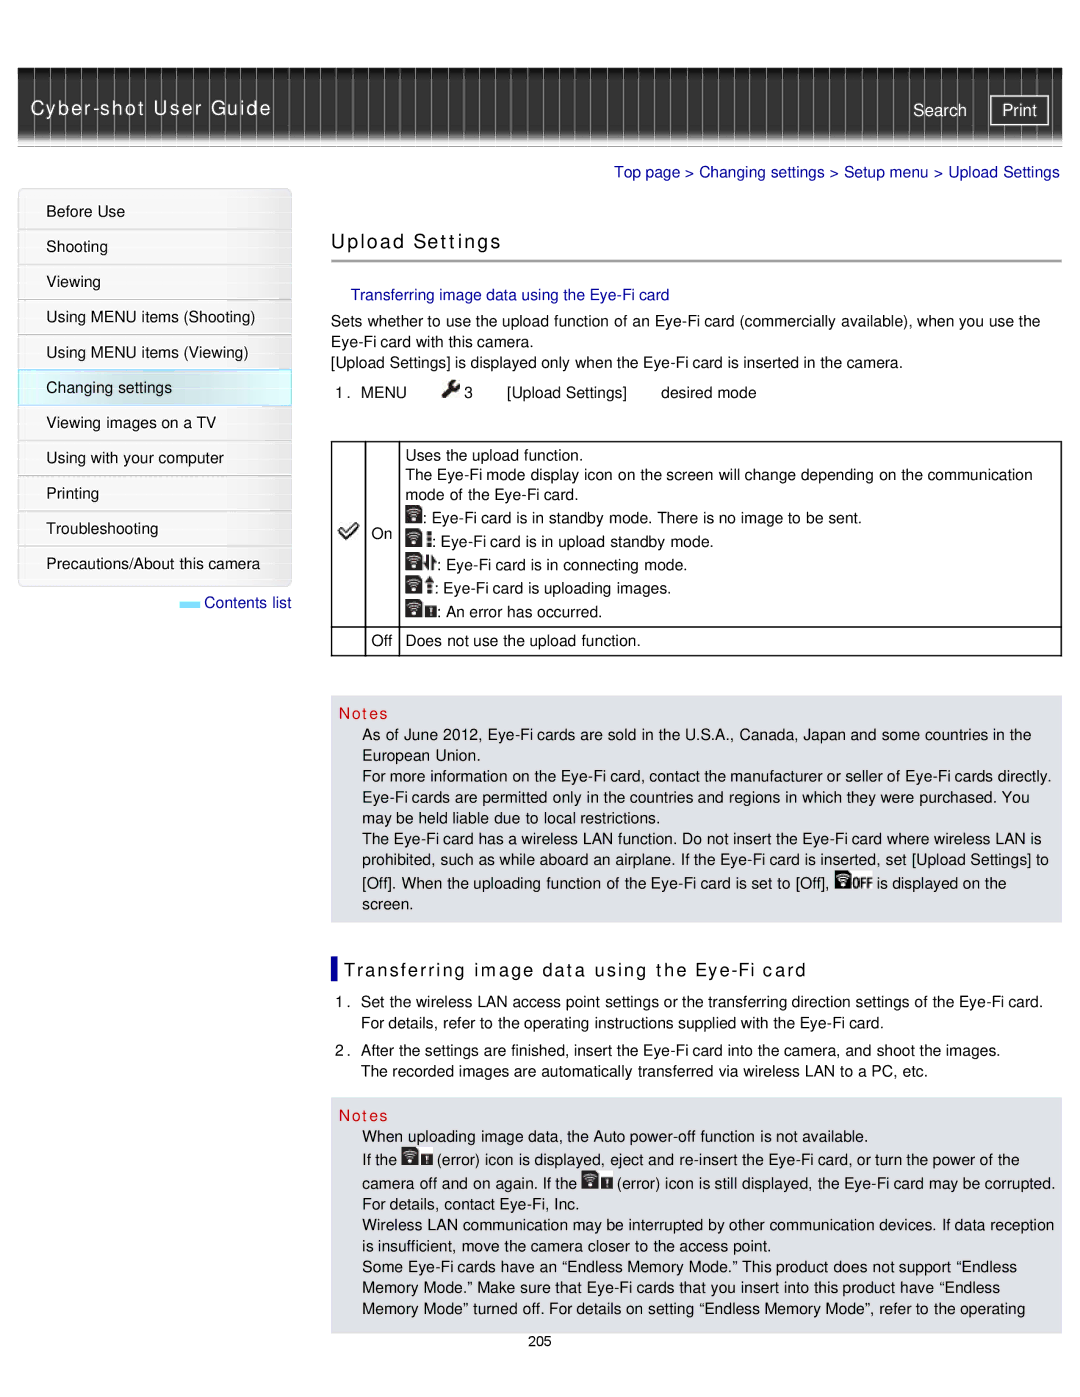 Sony DSC-RX1/RX1R manual Upload Settings, Transferring image data using the Eye-Fi card 